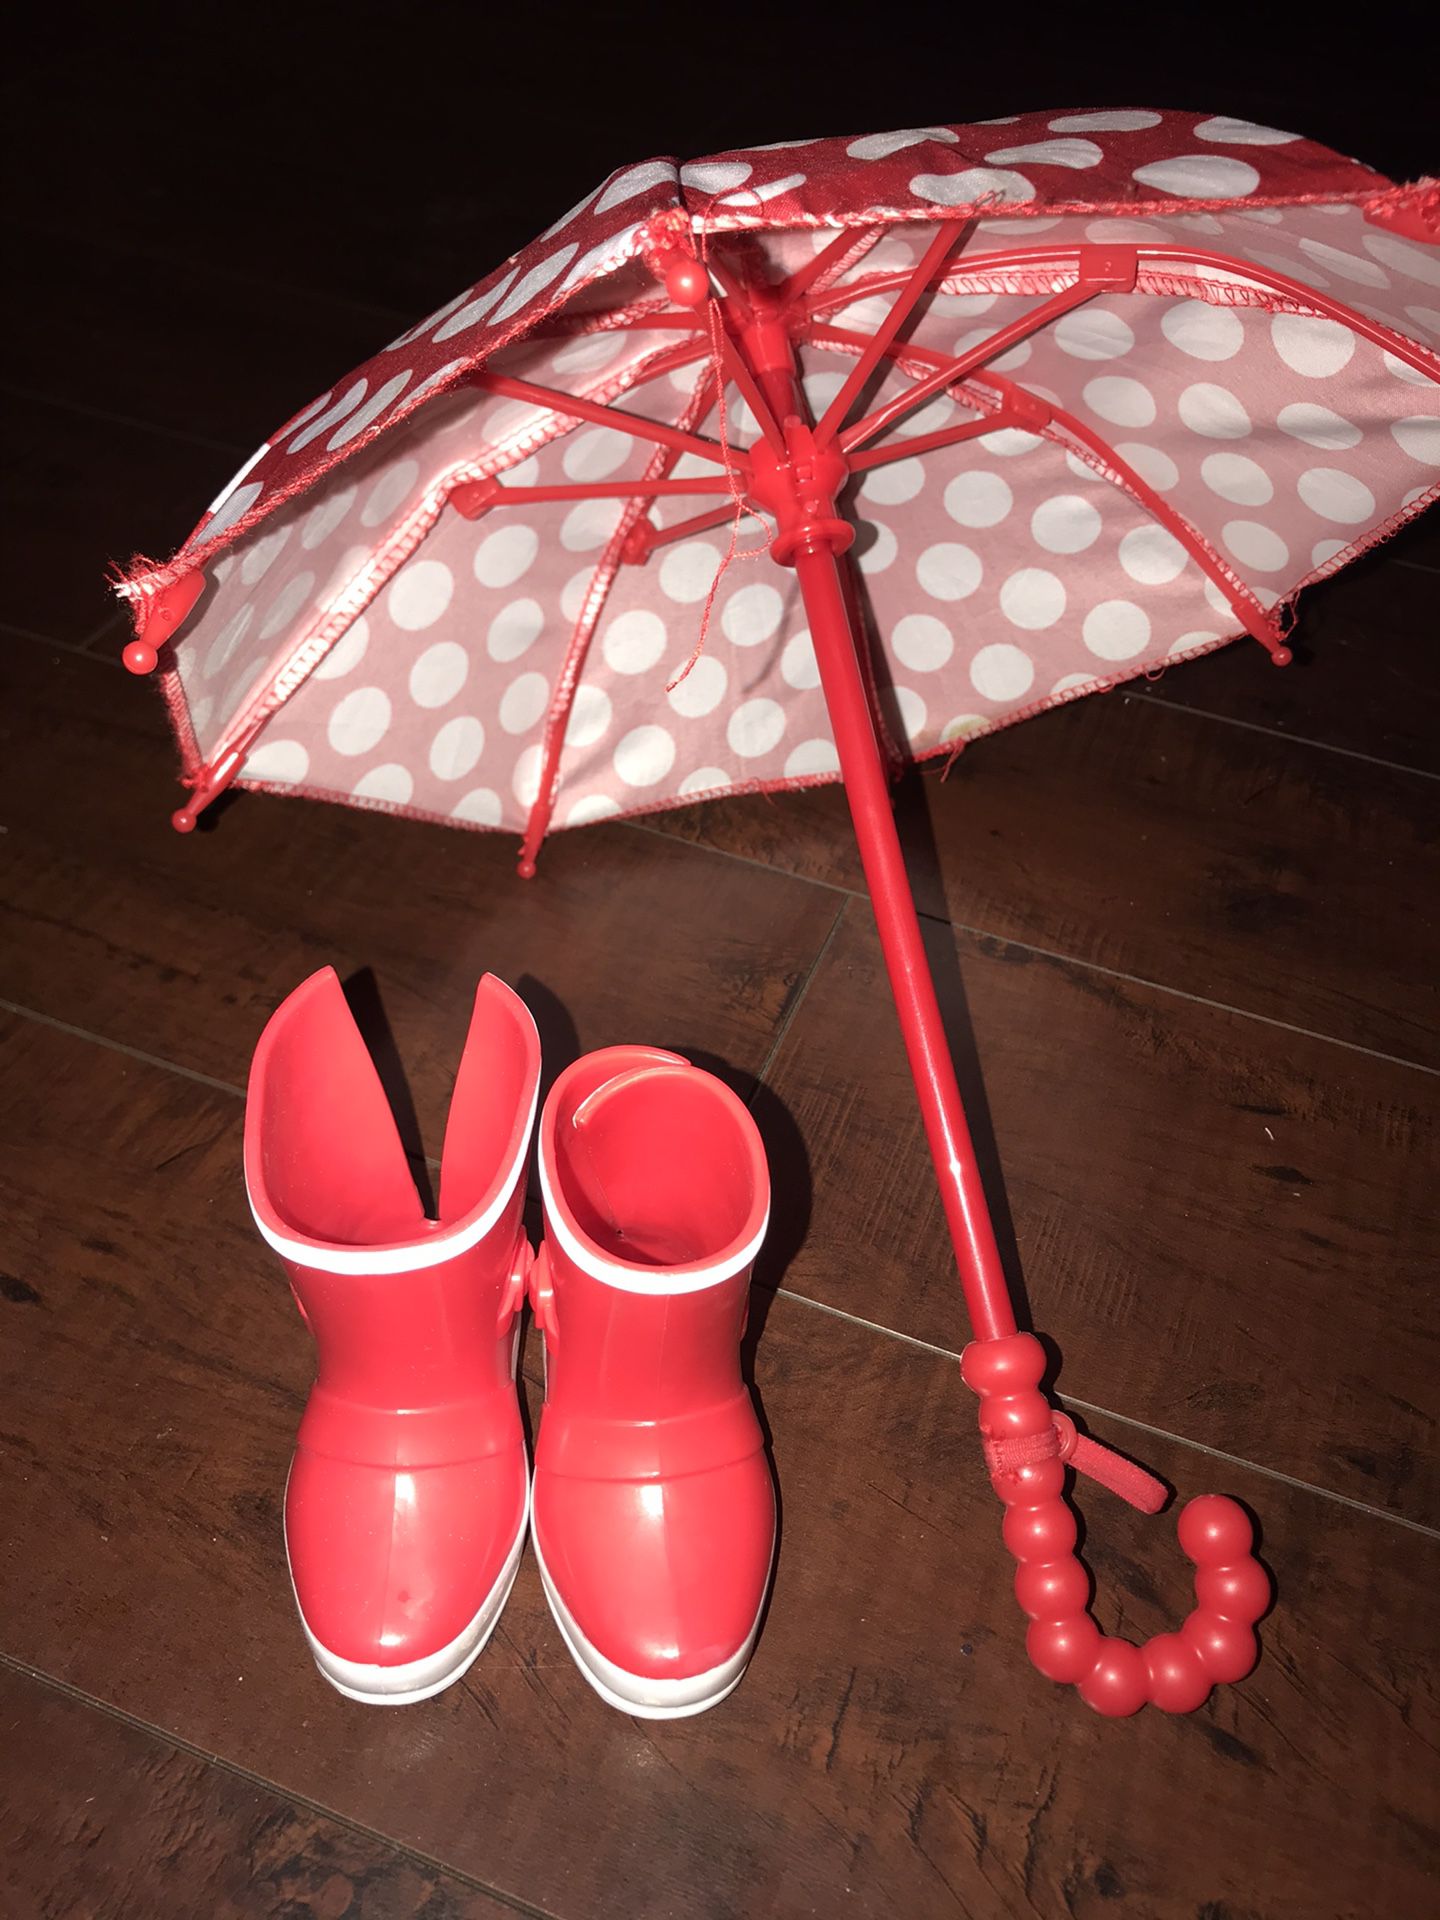 Og girl umbrella and rain boots